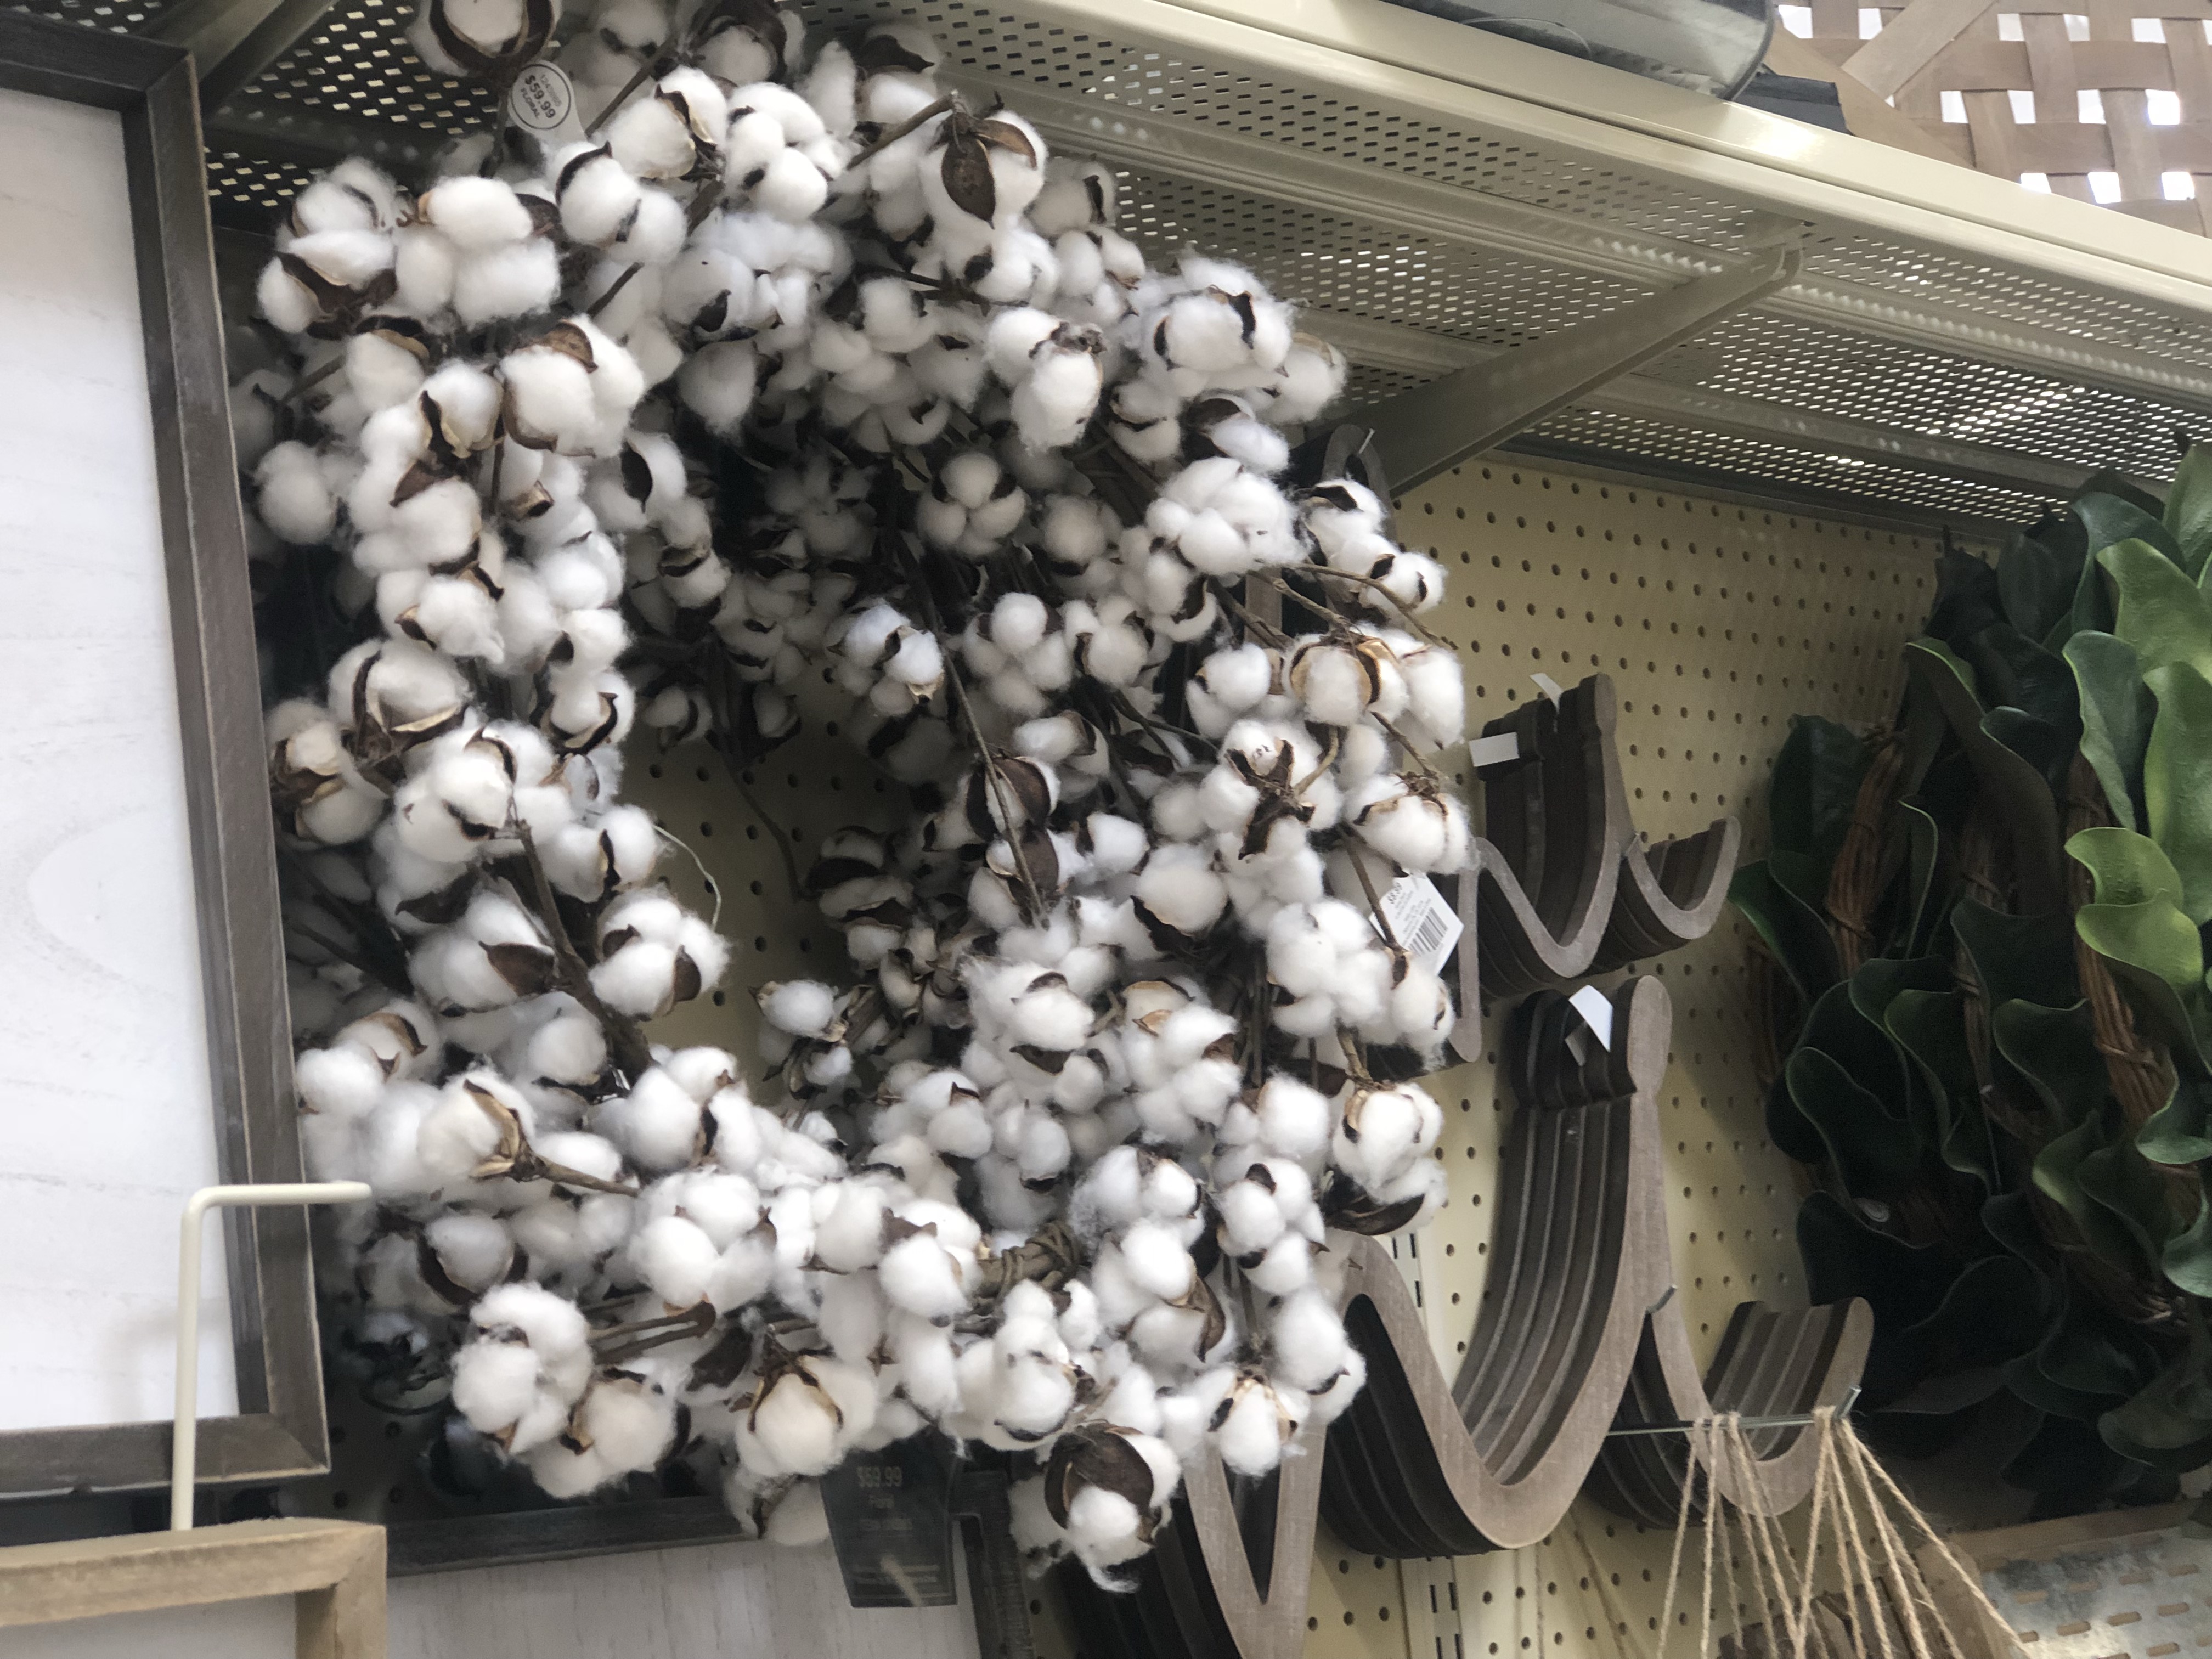 Trendy cotton wreath at Hobby Lobby looks just like Magnolia Market wreaths.